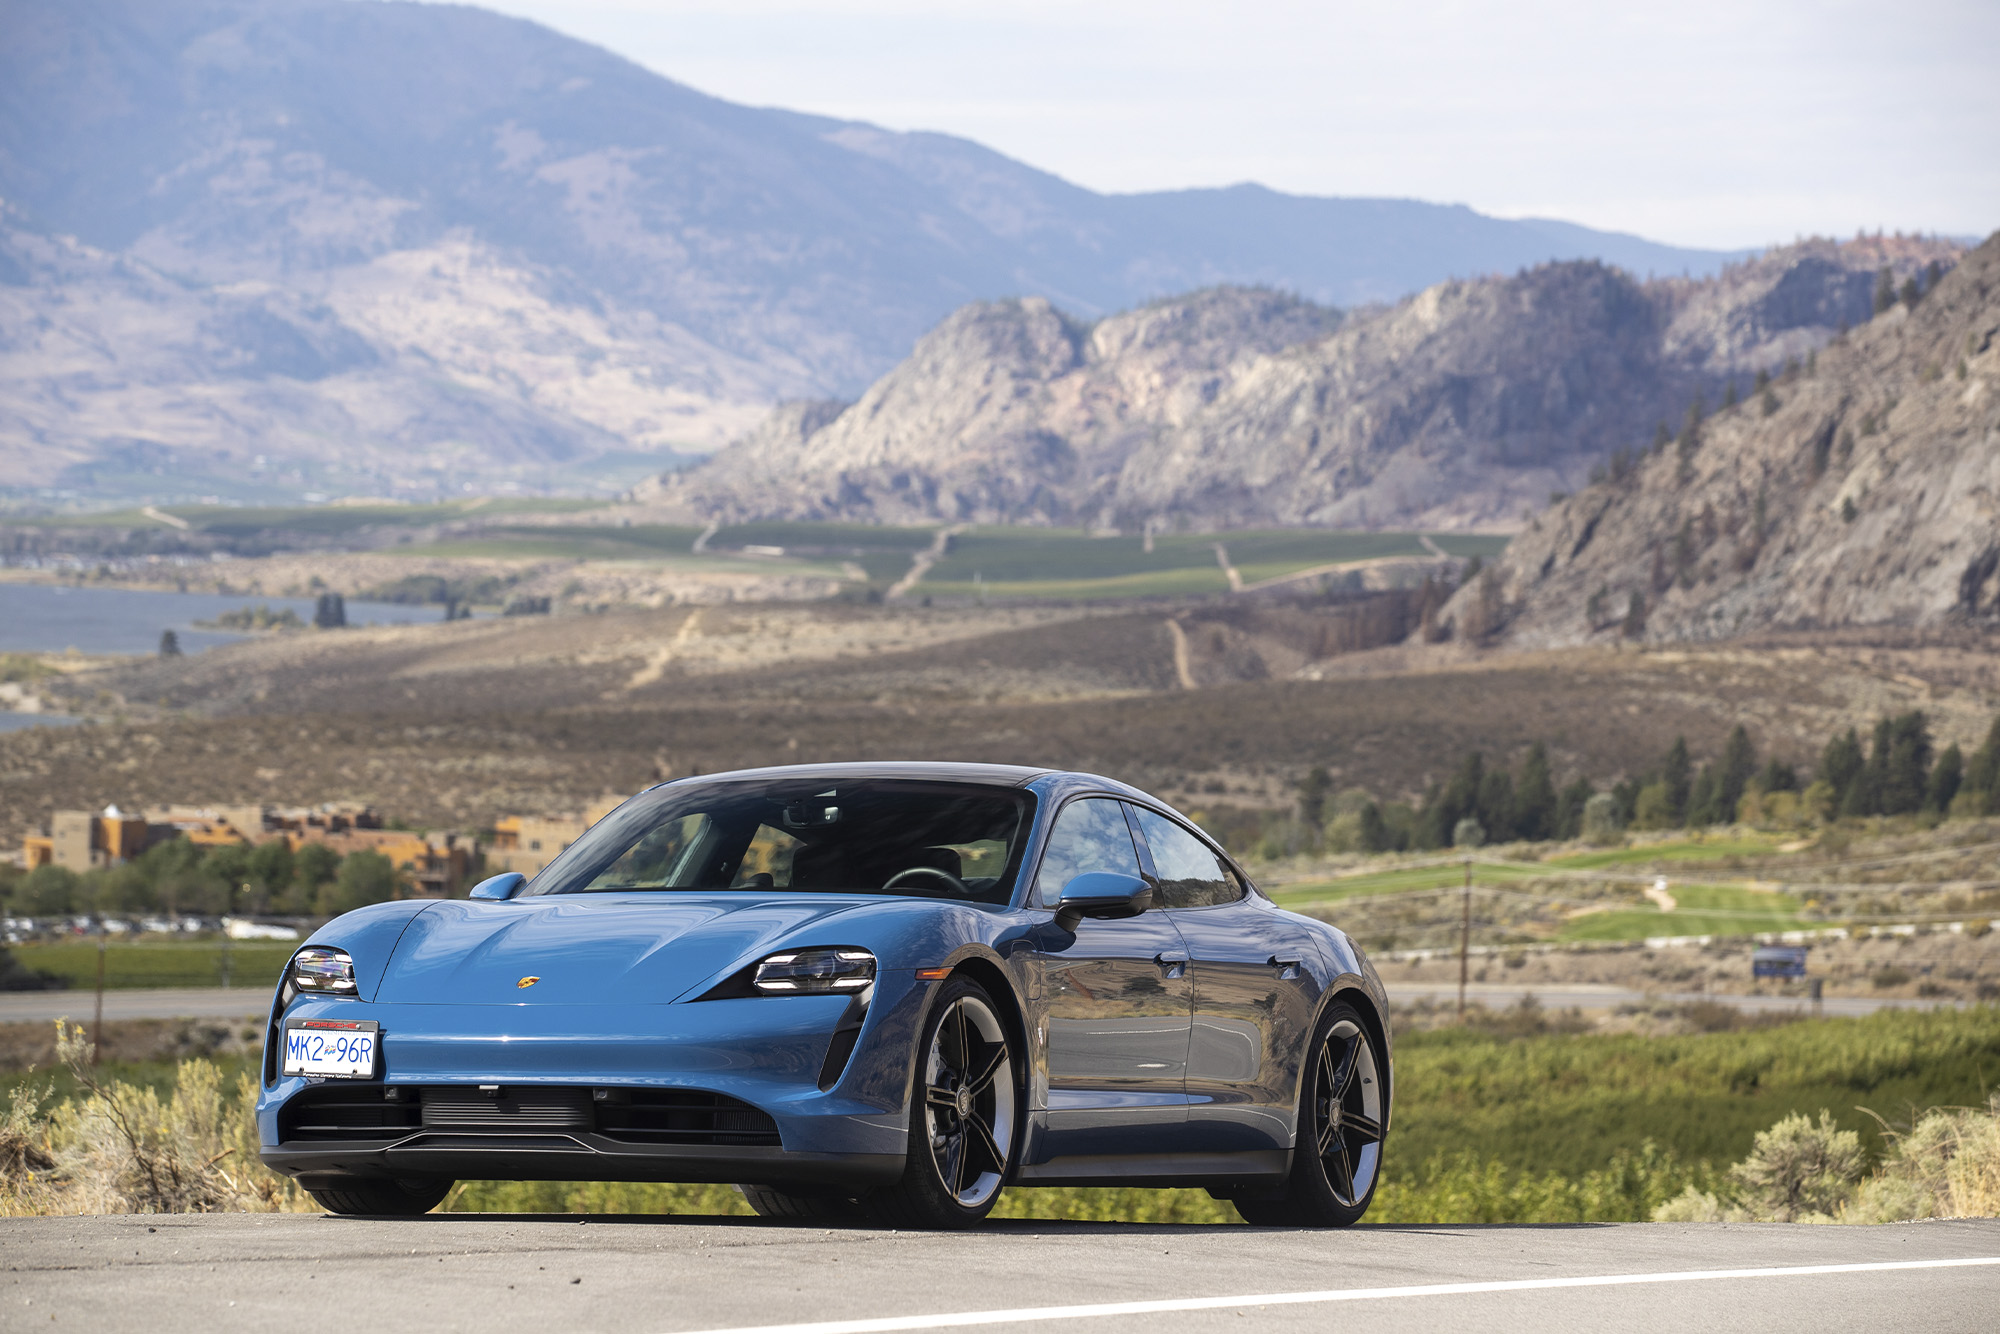 Spirit Ridge Resort: blue Porsche parked in desert, shot from the front-side